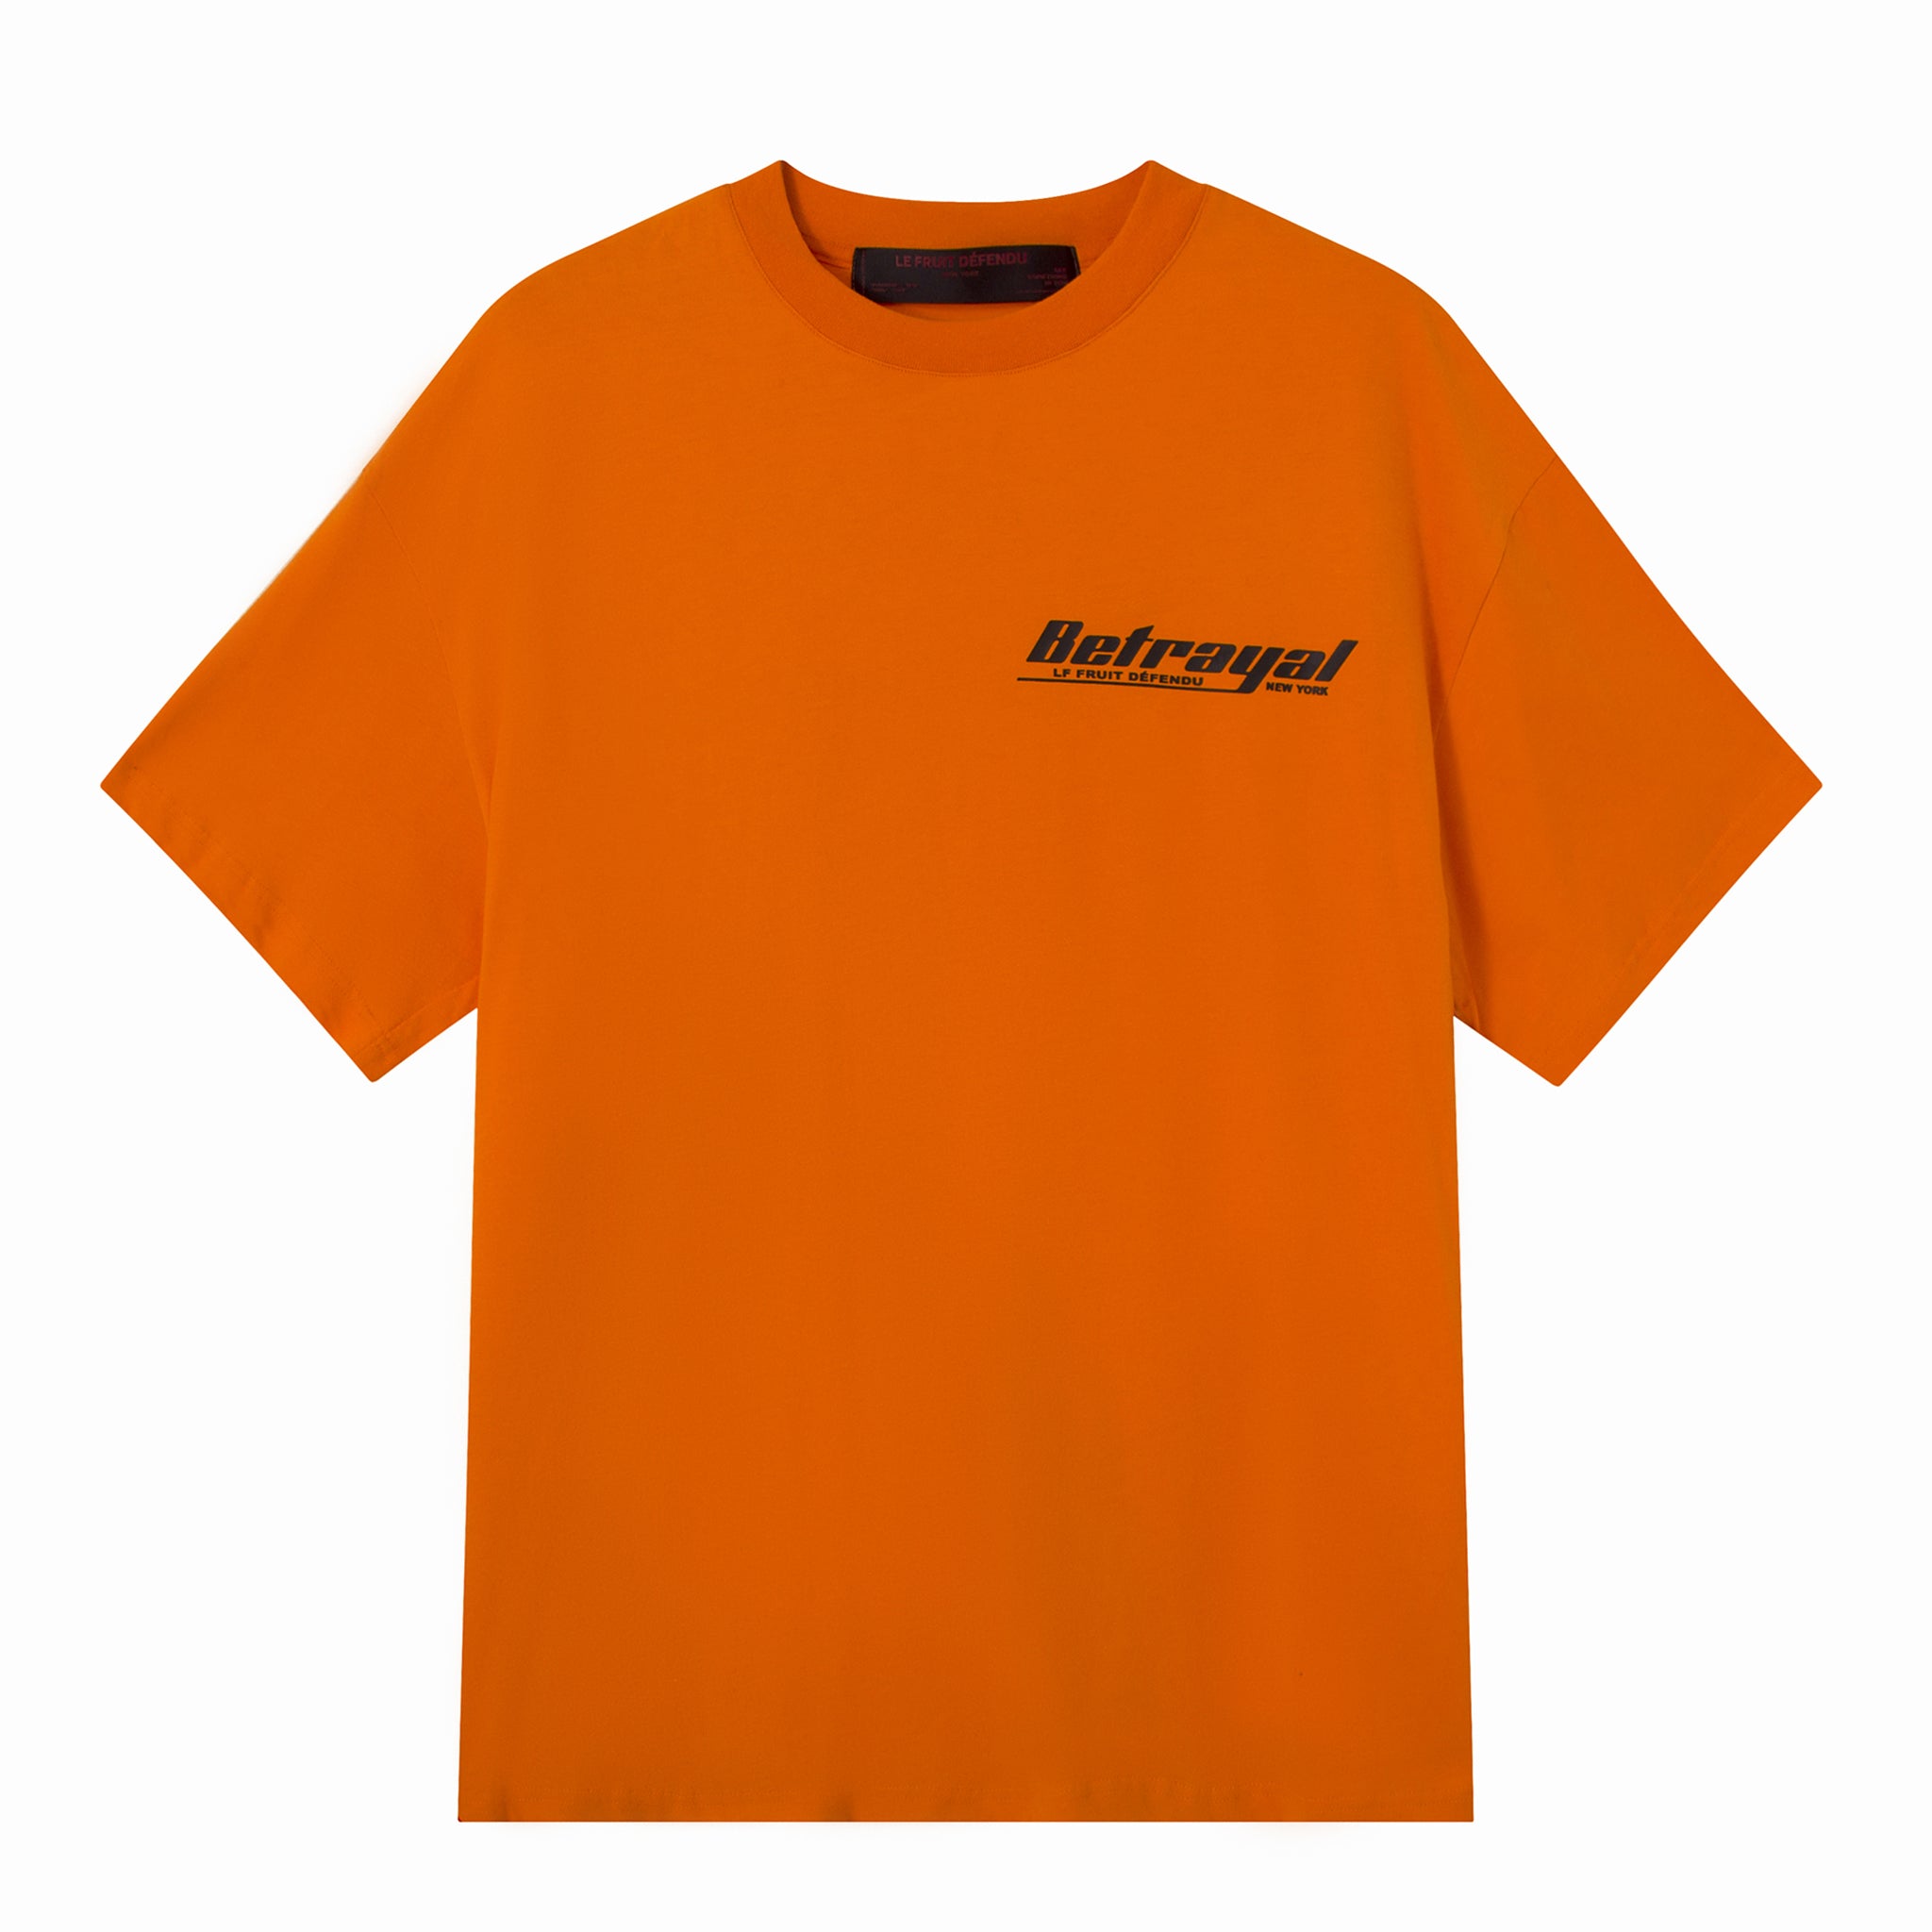 LFD Betrayal T-shirt - Orange